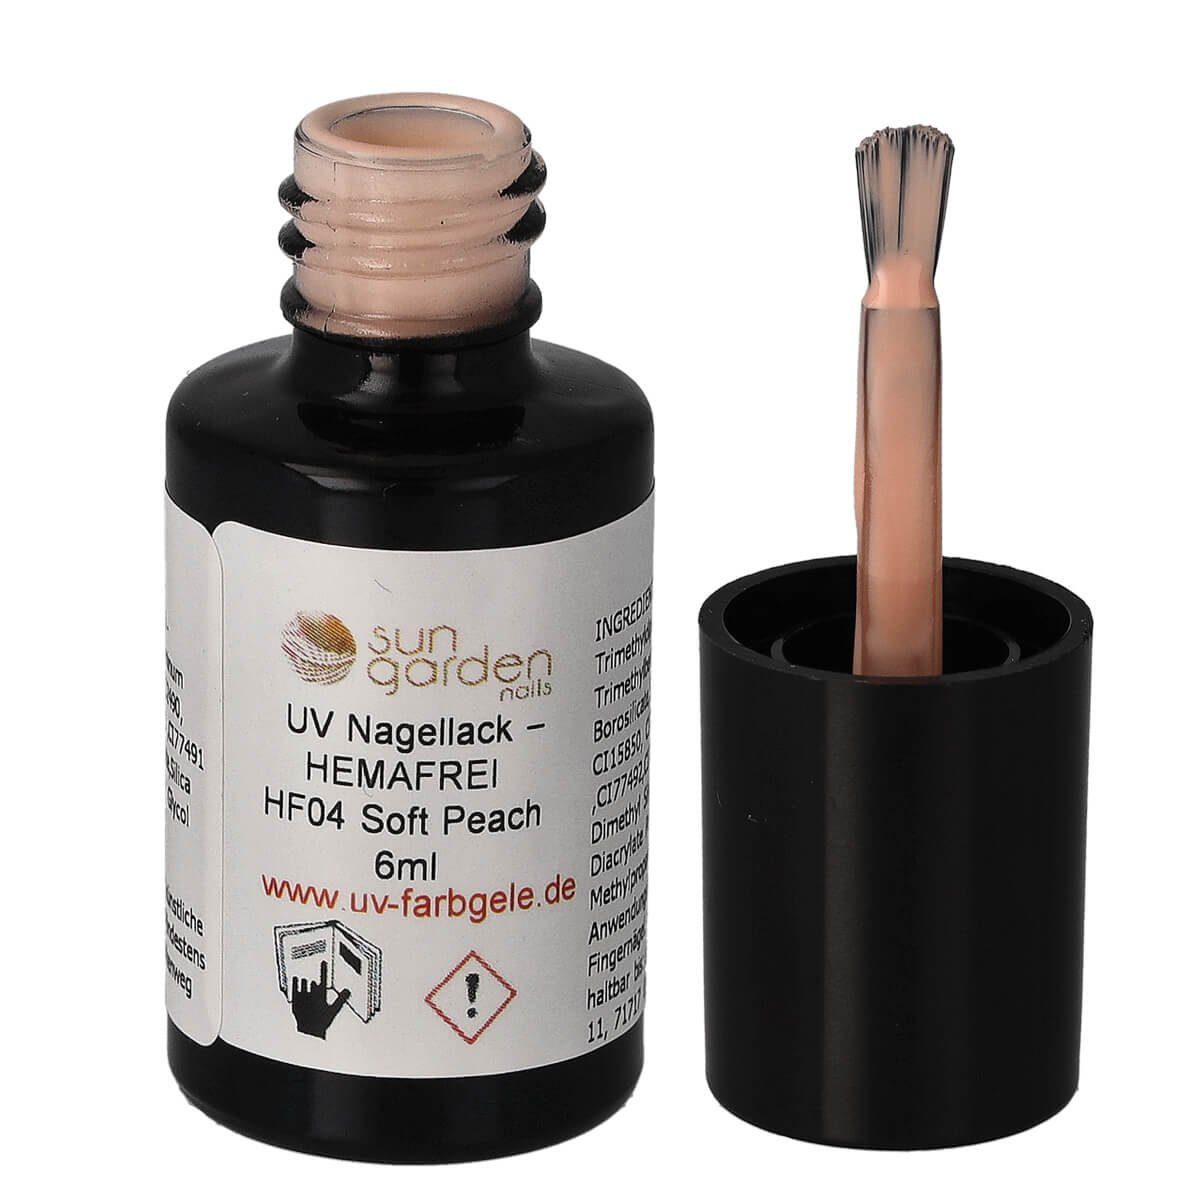 Sun Garden Nails Nagellack HF04 – Nagellack HEMAFREI Soft Peach - 6ml UV